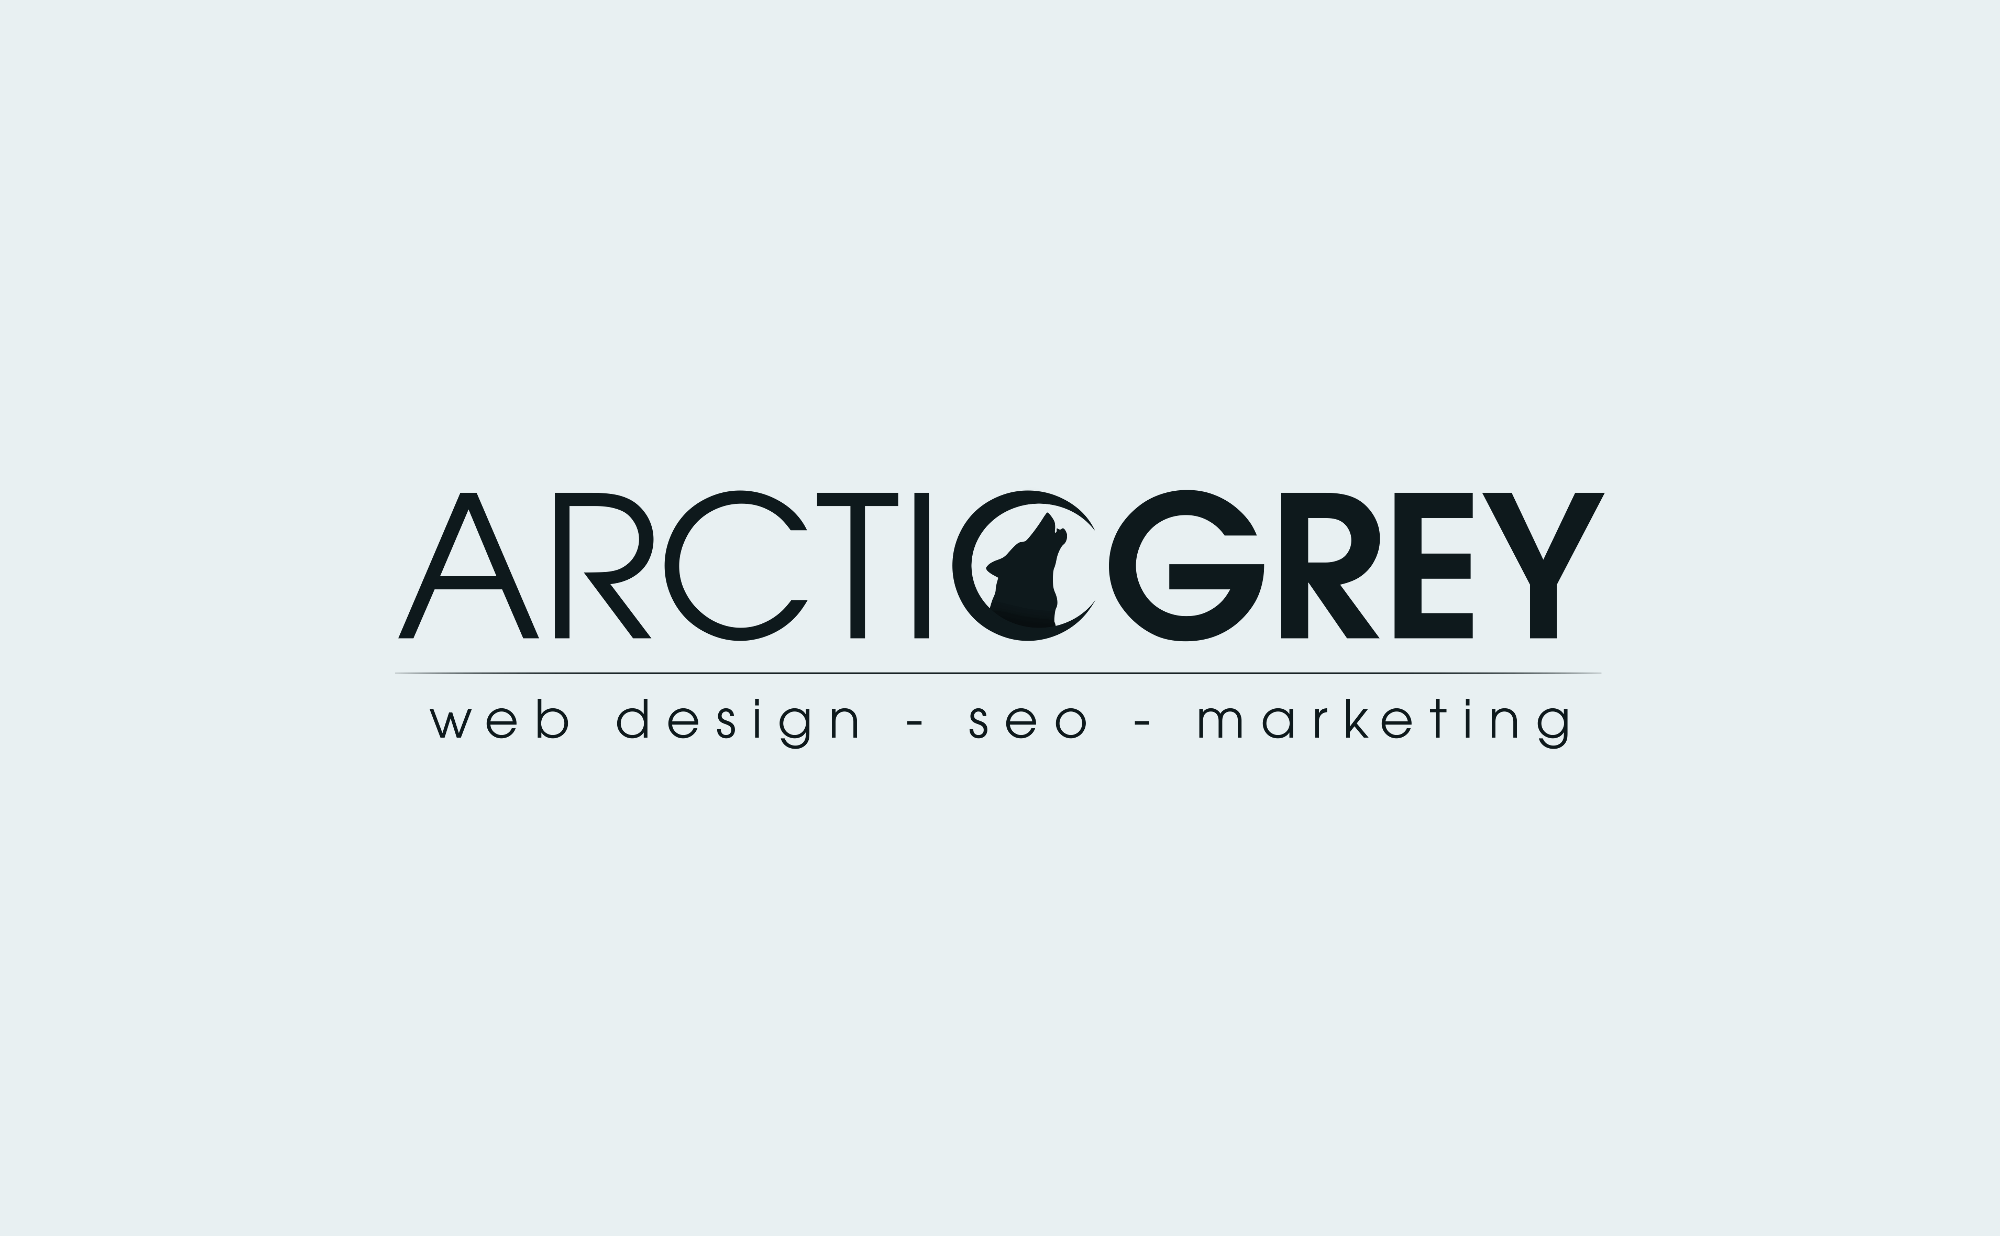 Top Shopify Development Company Logo: Arctic Grey Inc